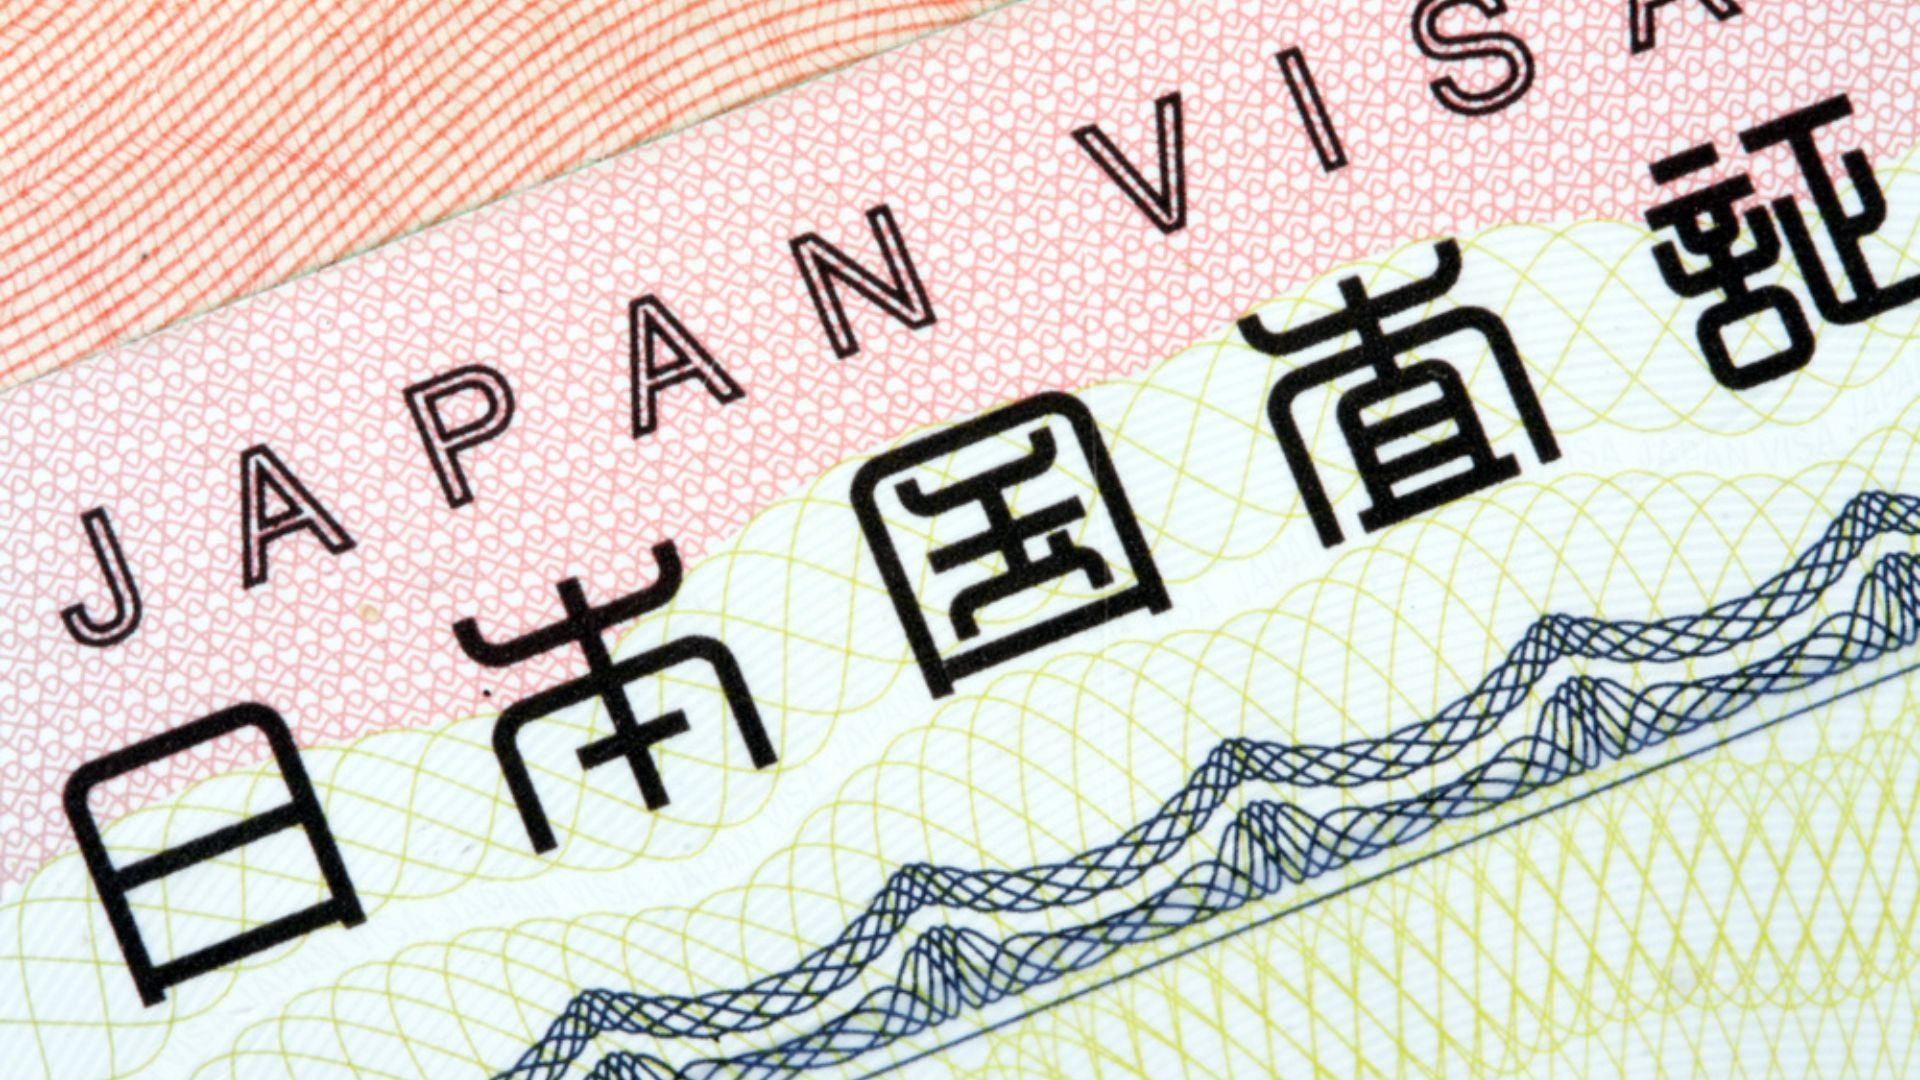 Japan tourist visa